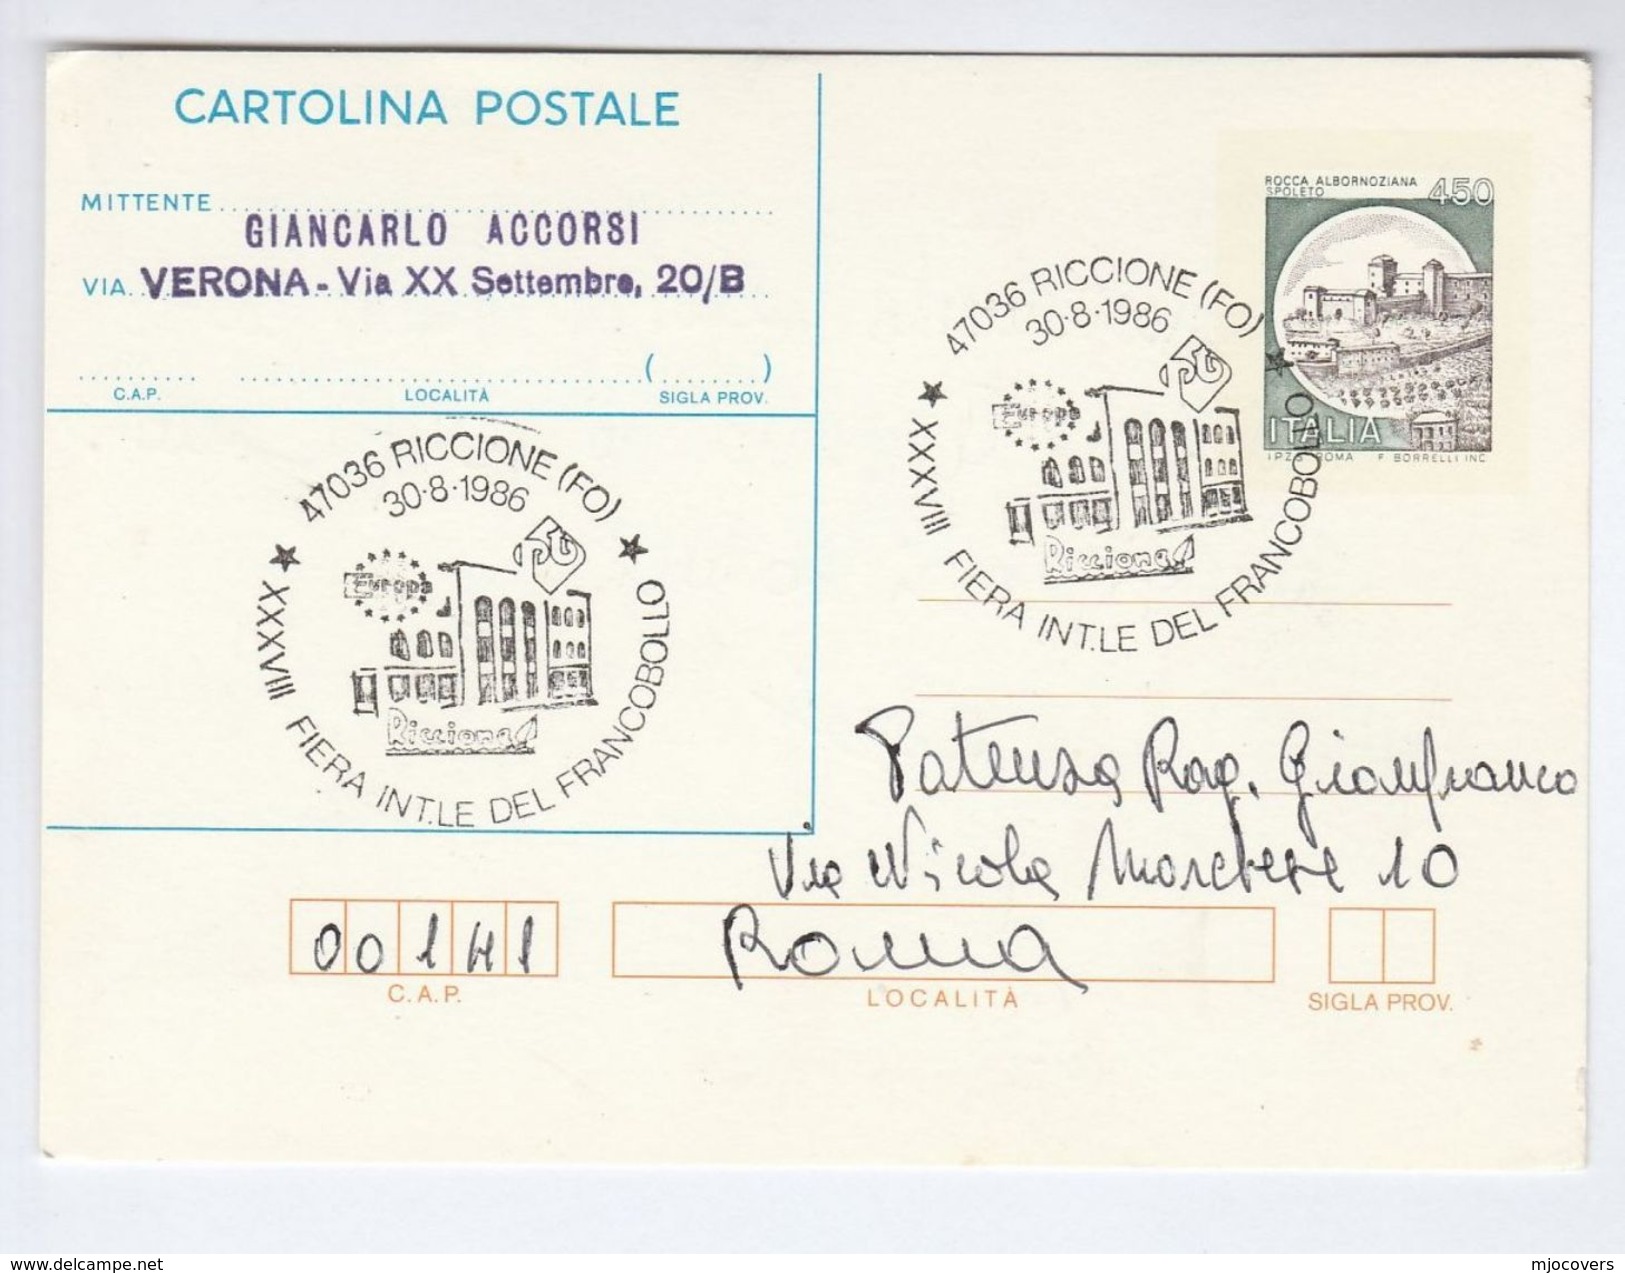 1986 RICCIONE International STAMP FAIR EVENT COVER Postal Stationery Card Italy Philatelic Exhibition Europa Castle - Interi Postali